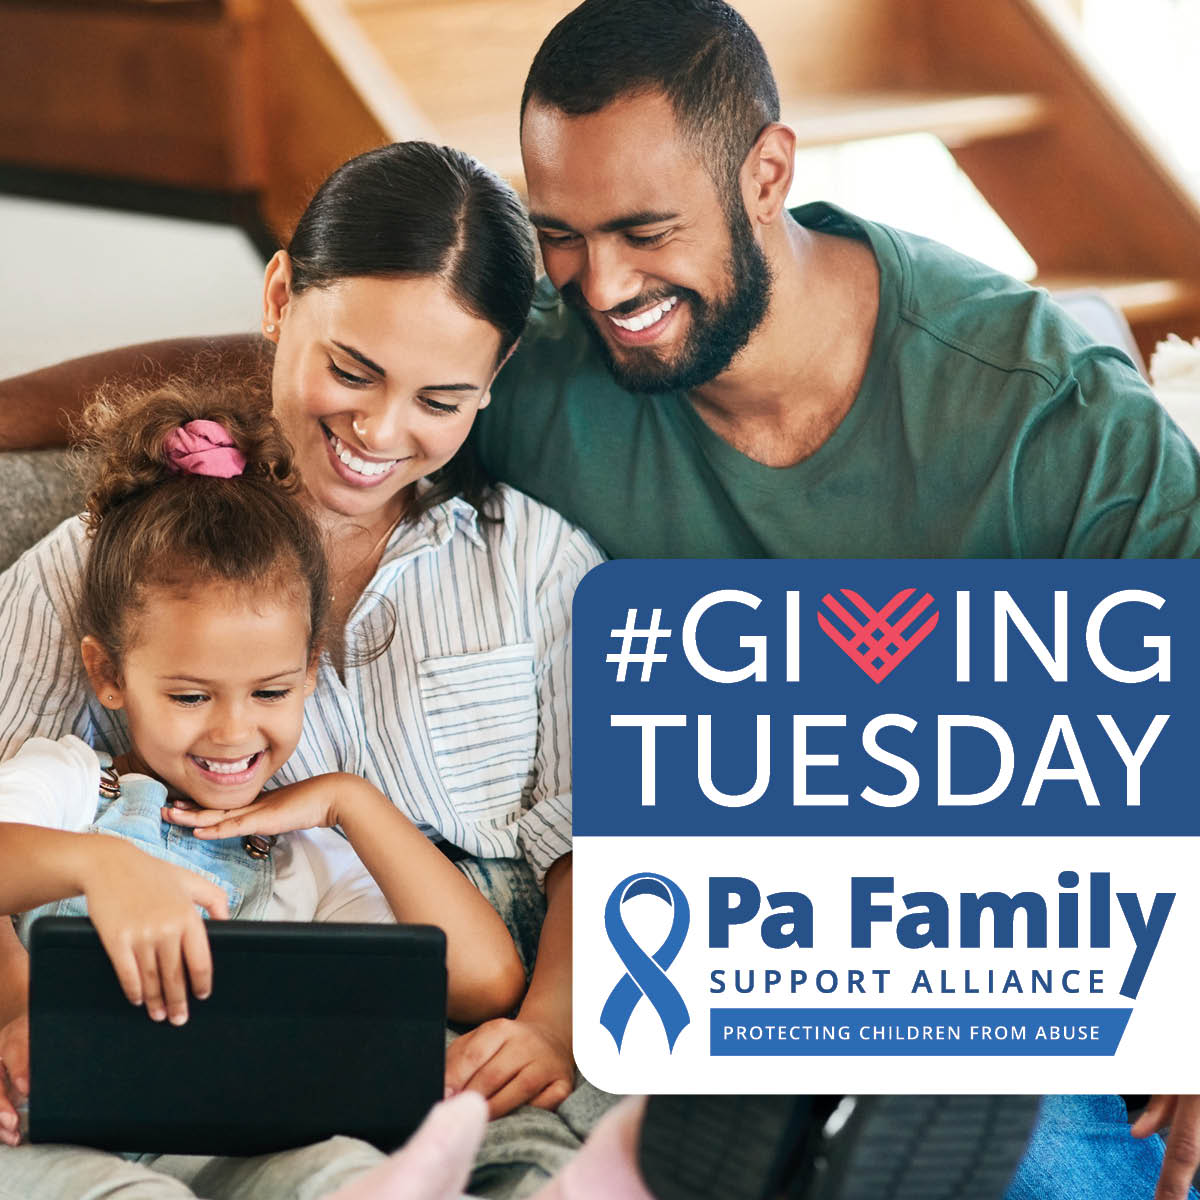 Family Digital Wellness  Pennsylvania Family Support Alliance